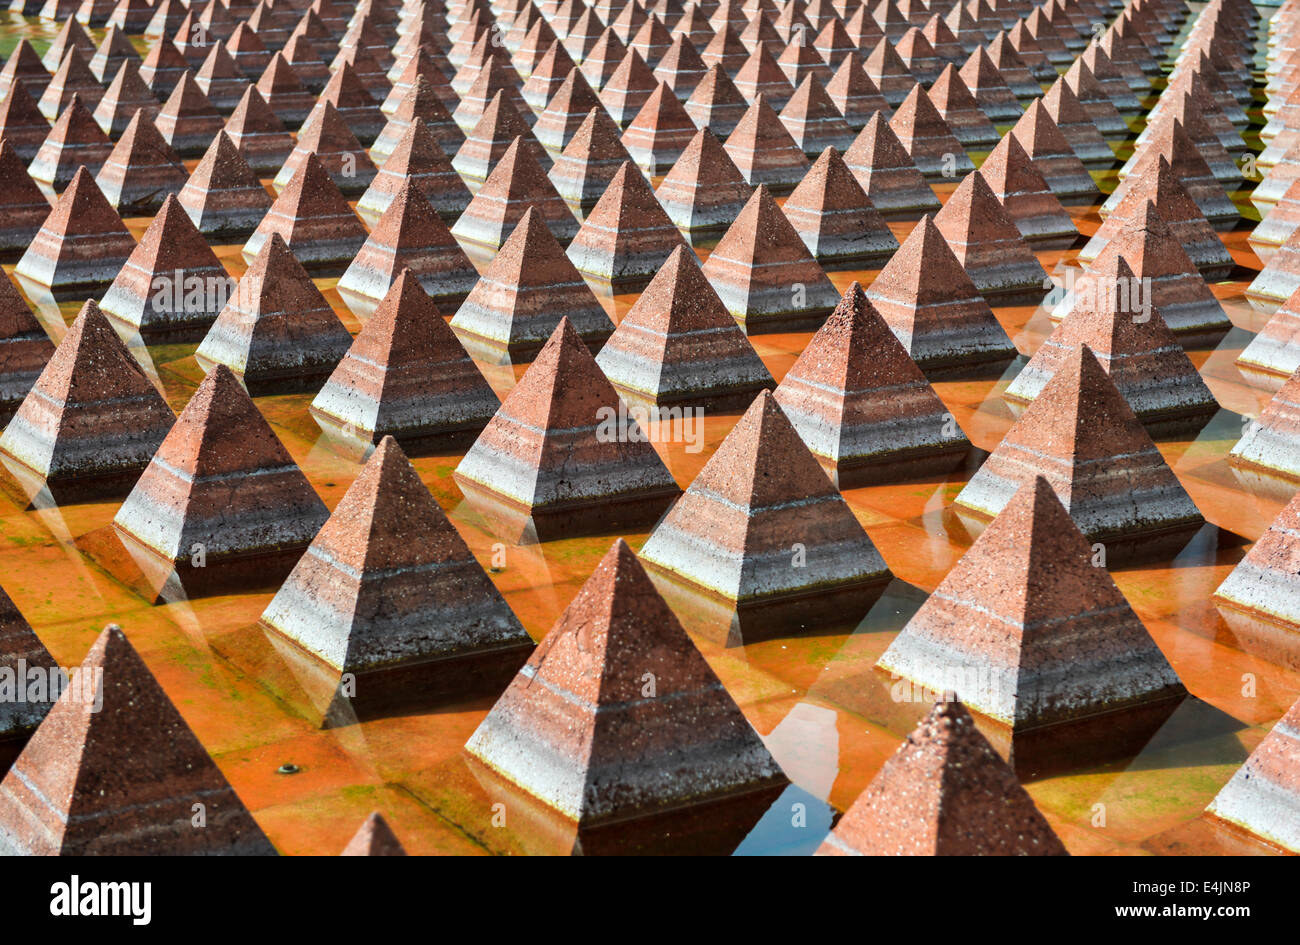 Plaza Juarez, Mexiko-Stadt, Mexiko. Eine Reihe von 1034 rötliche Pyramiden in einem breiten Pool in Plaza Juarez. Stockfoto